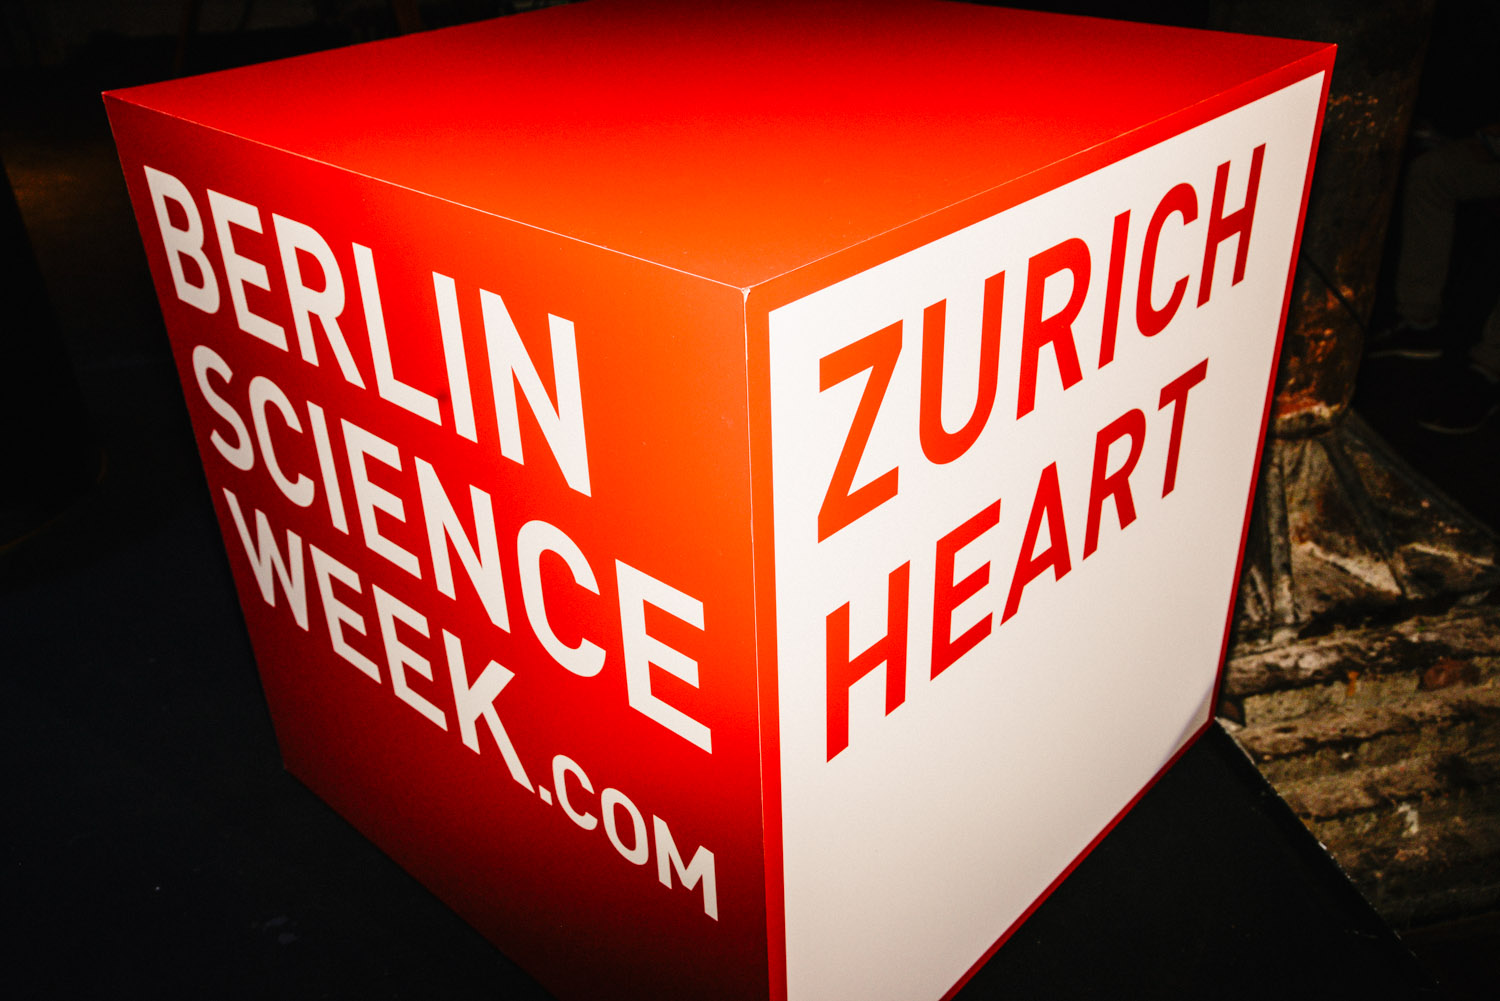 Zurich Heart at Berlin Science Week